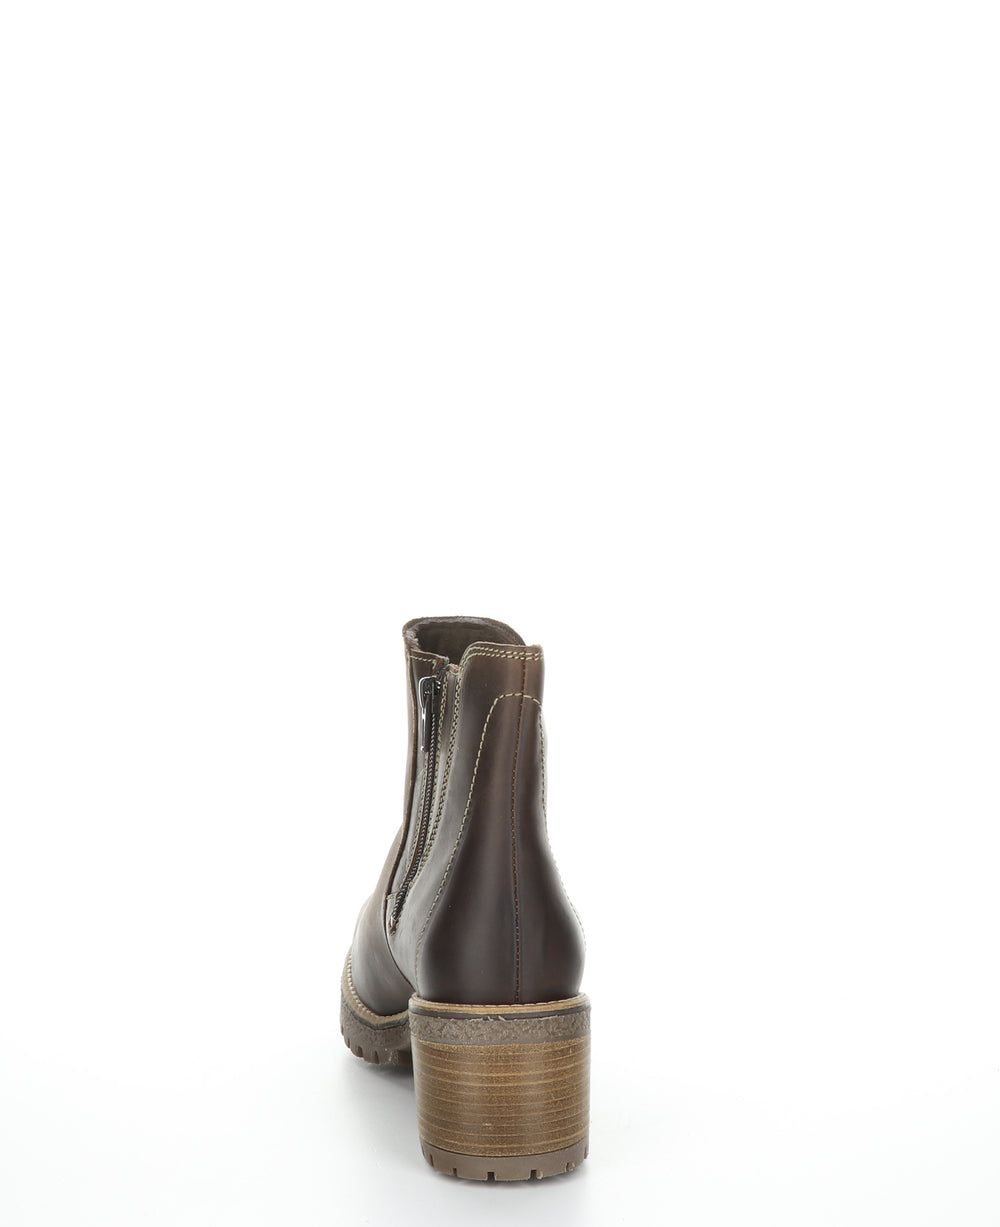 MASS Espresso/Dk Brn Zip Up Ankle Boots|MASS Bottines avec Fermeture Zippée in Marron